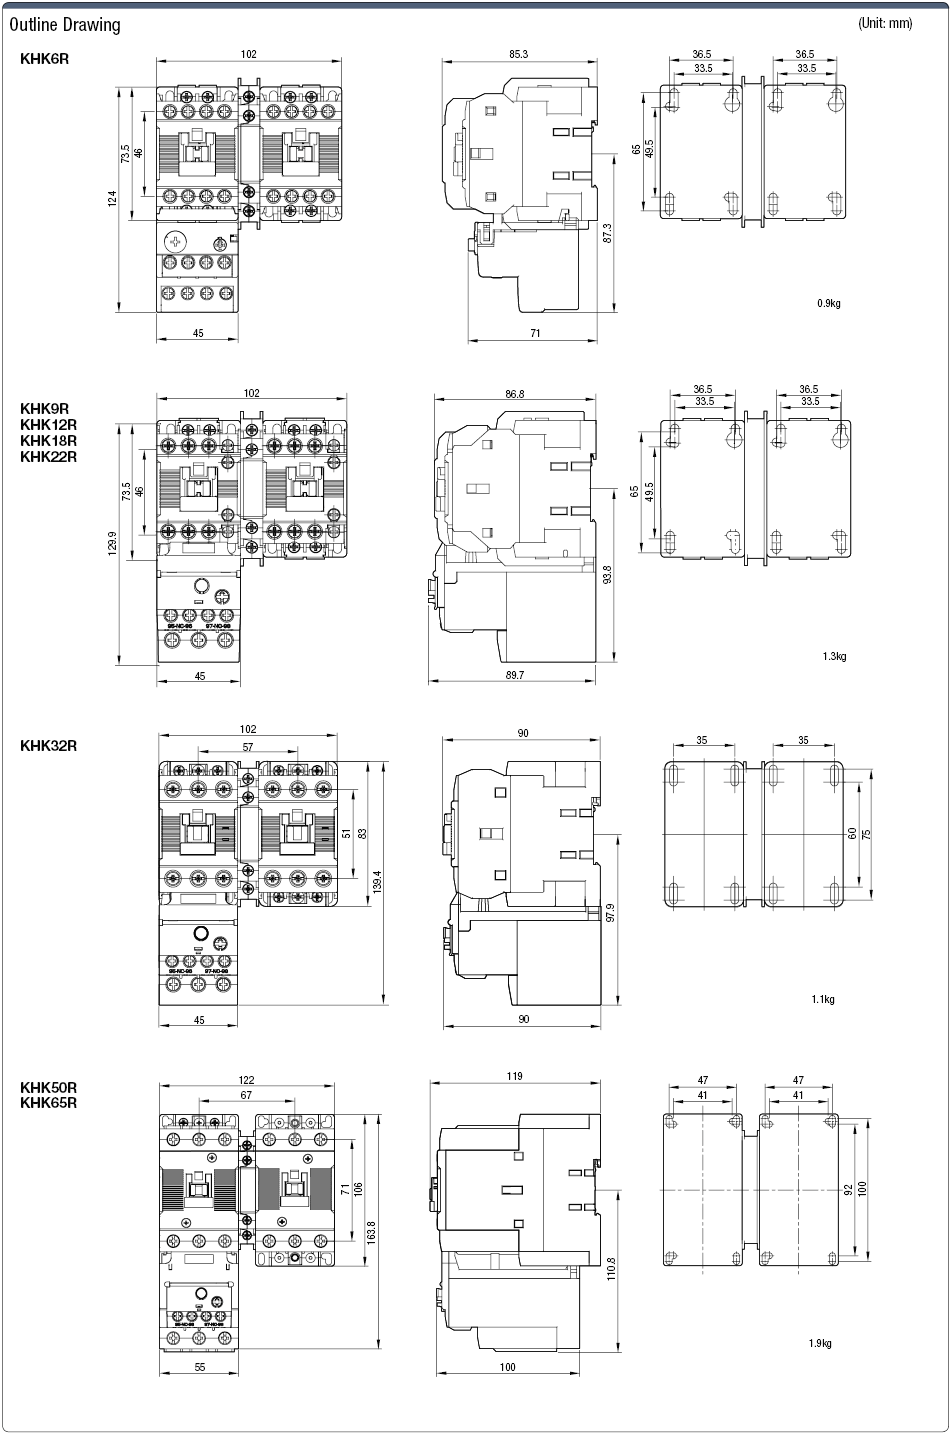 Bobina de interruptor electromagnético reversible de 100 V CA: imagen relacionada